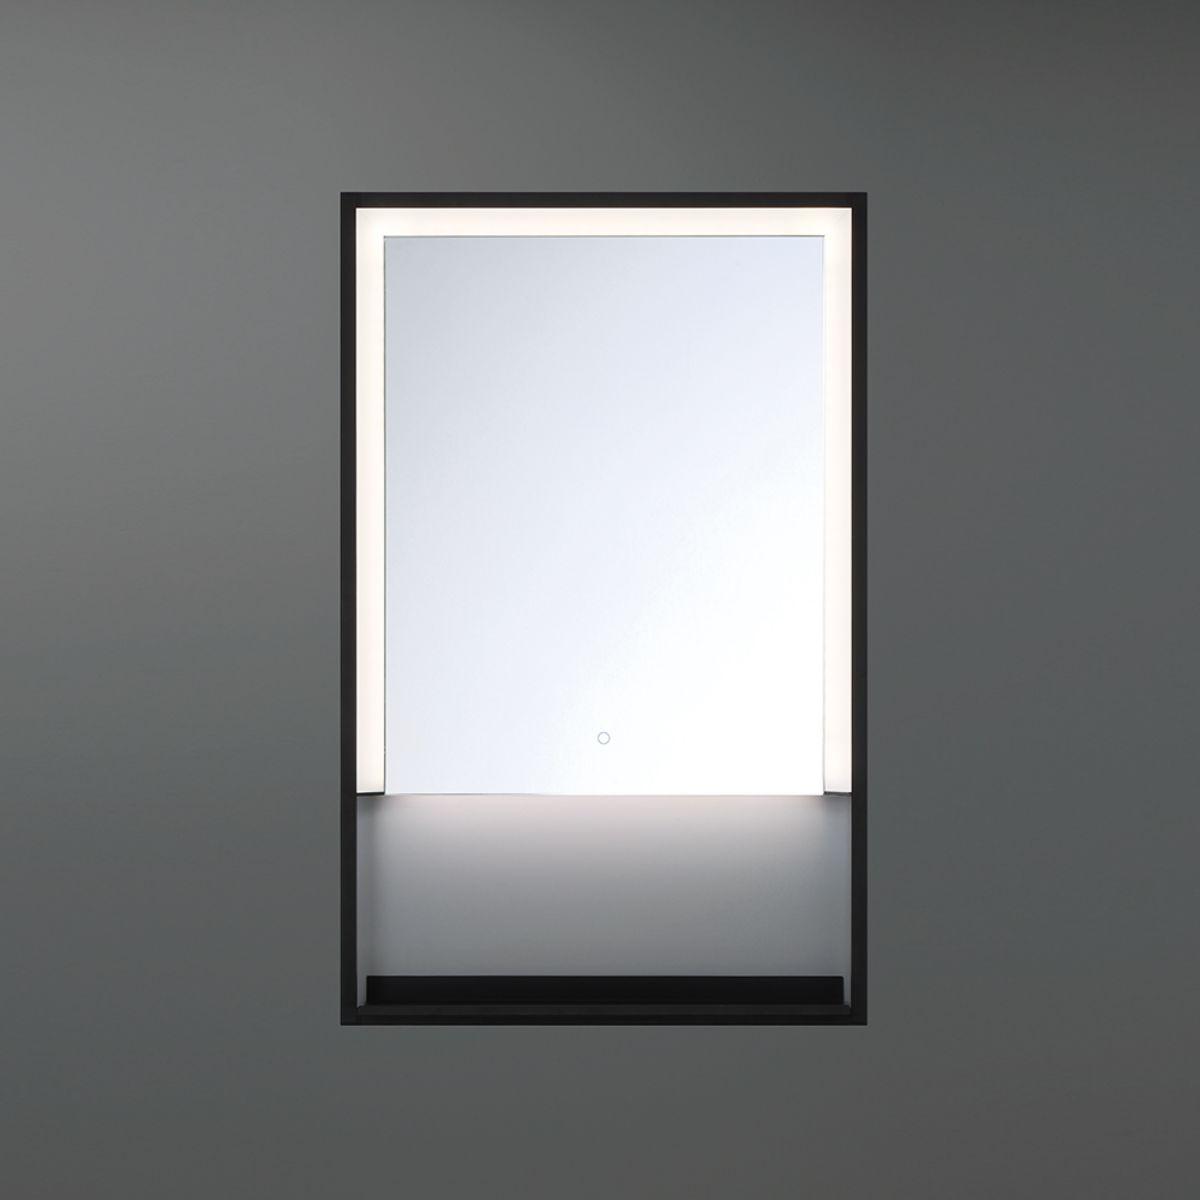 Sayora 20 In x 32 In. Black LED Wall Mirror